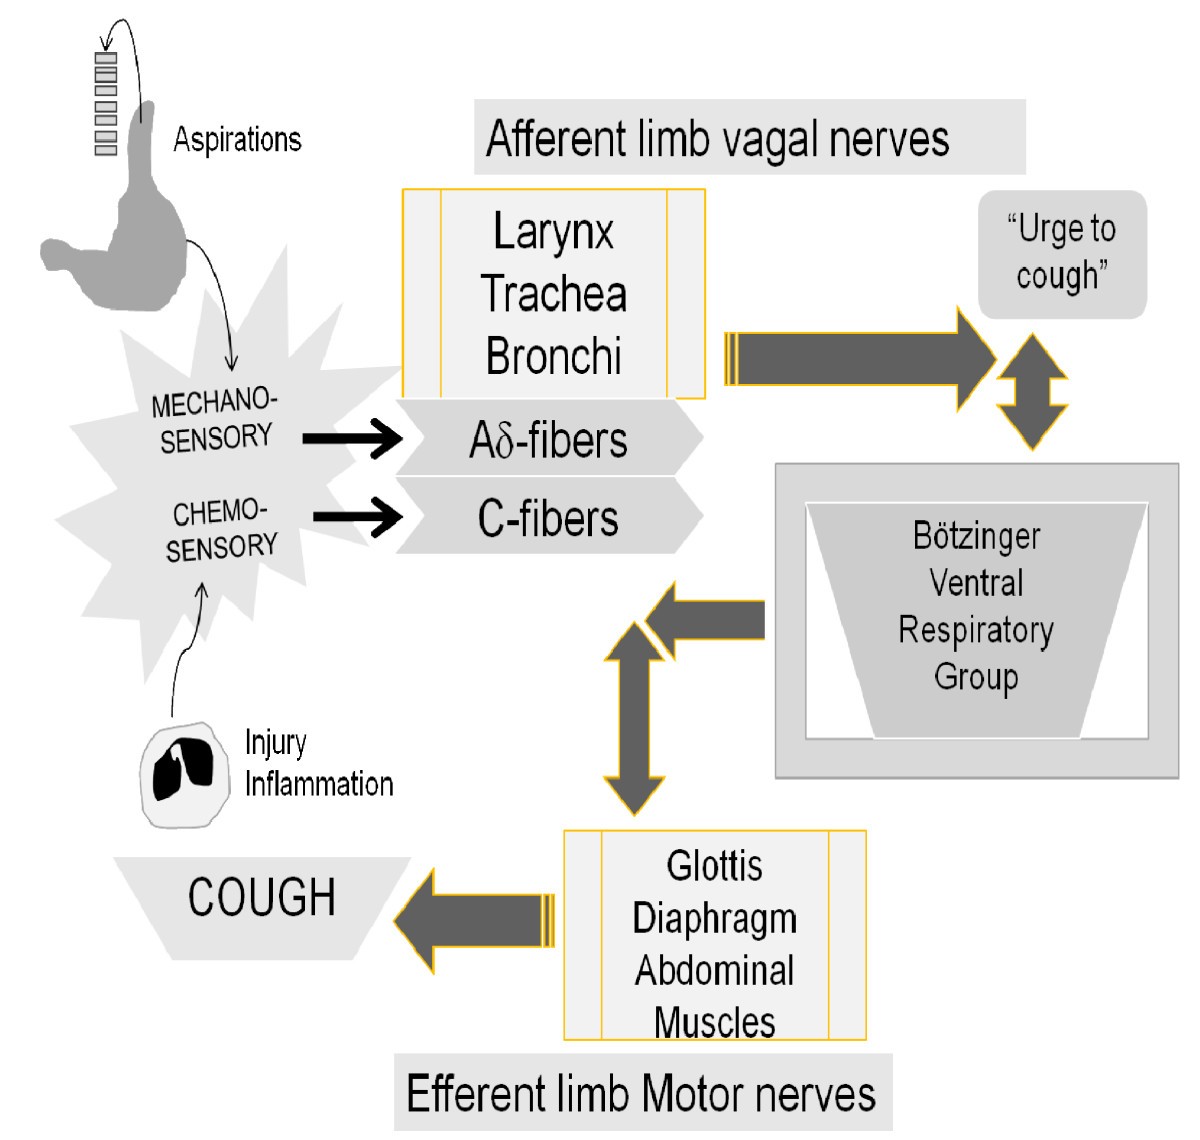 File:Types of Cough Reflex.jpg